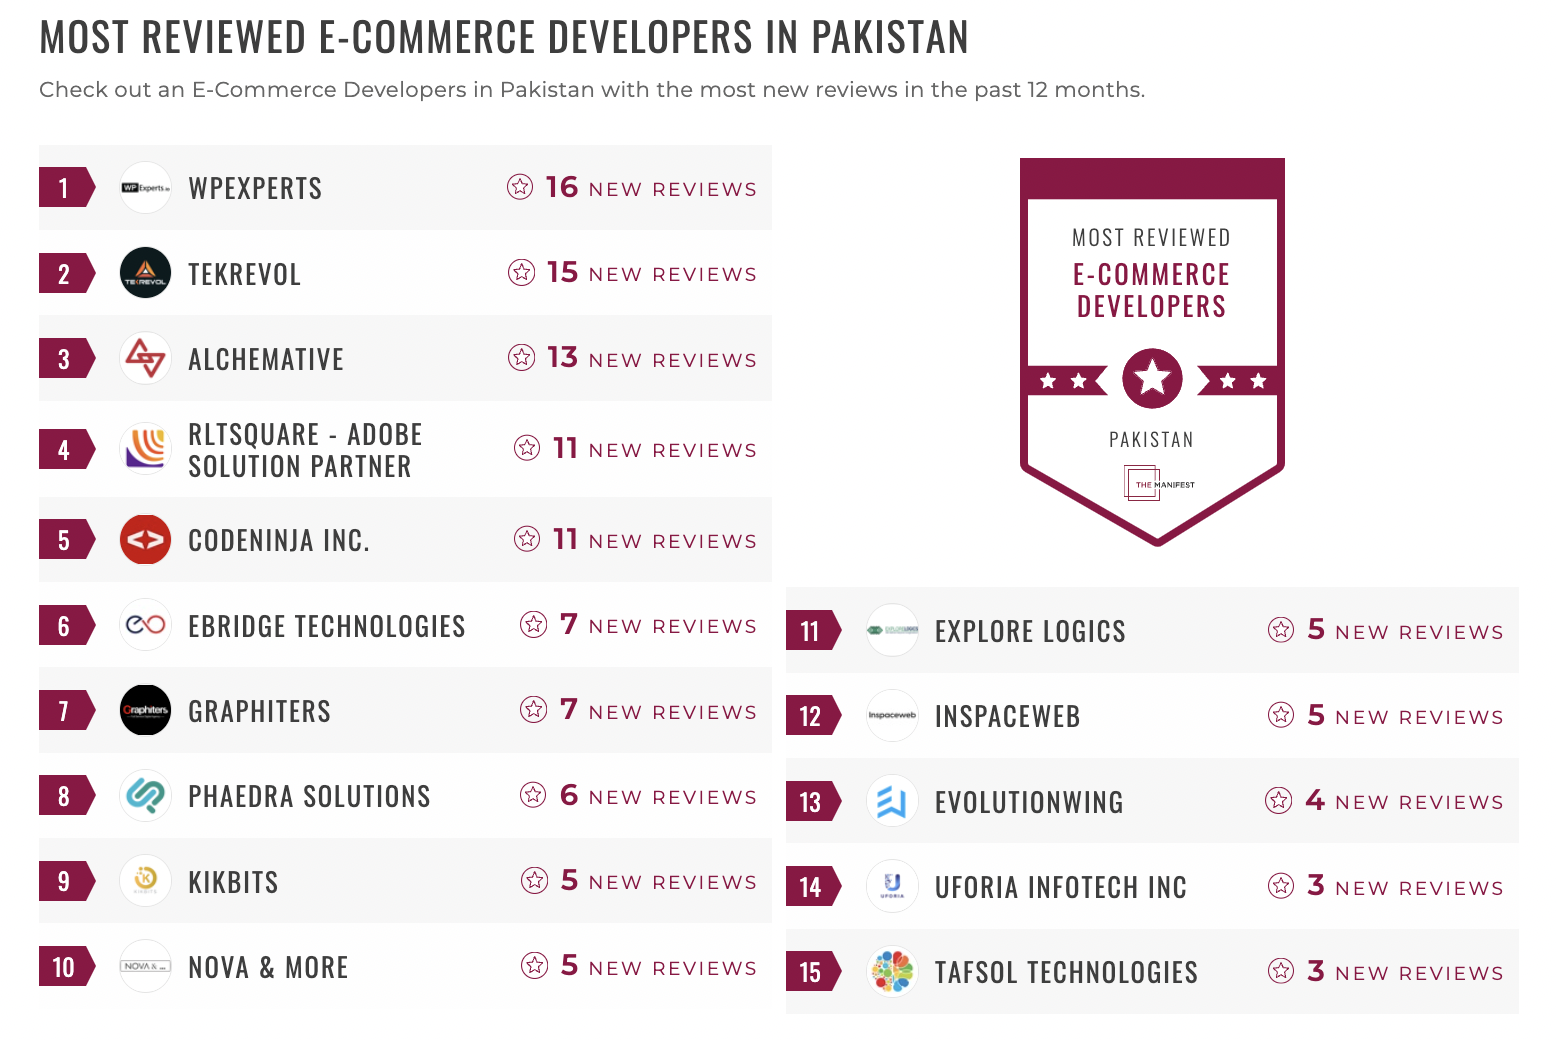 Pakistan E-Commerce Development Leaders